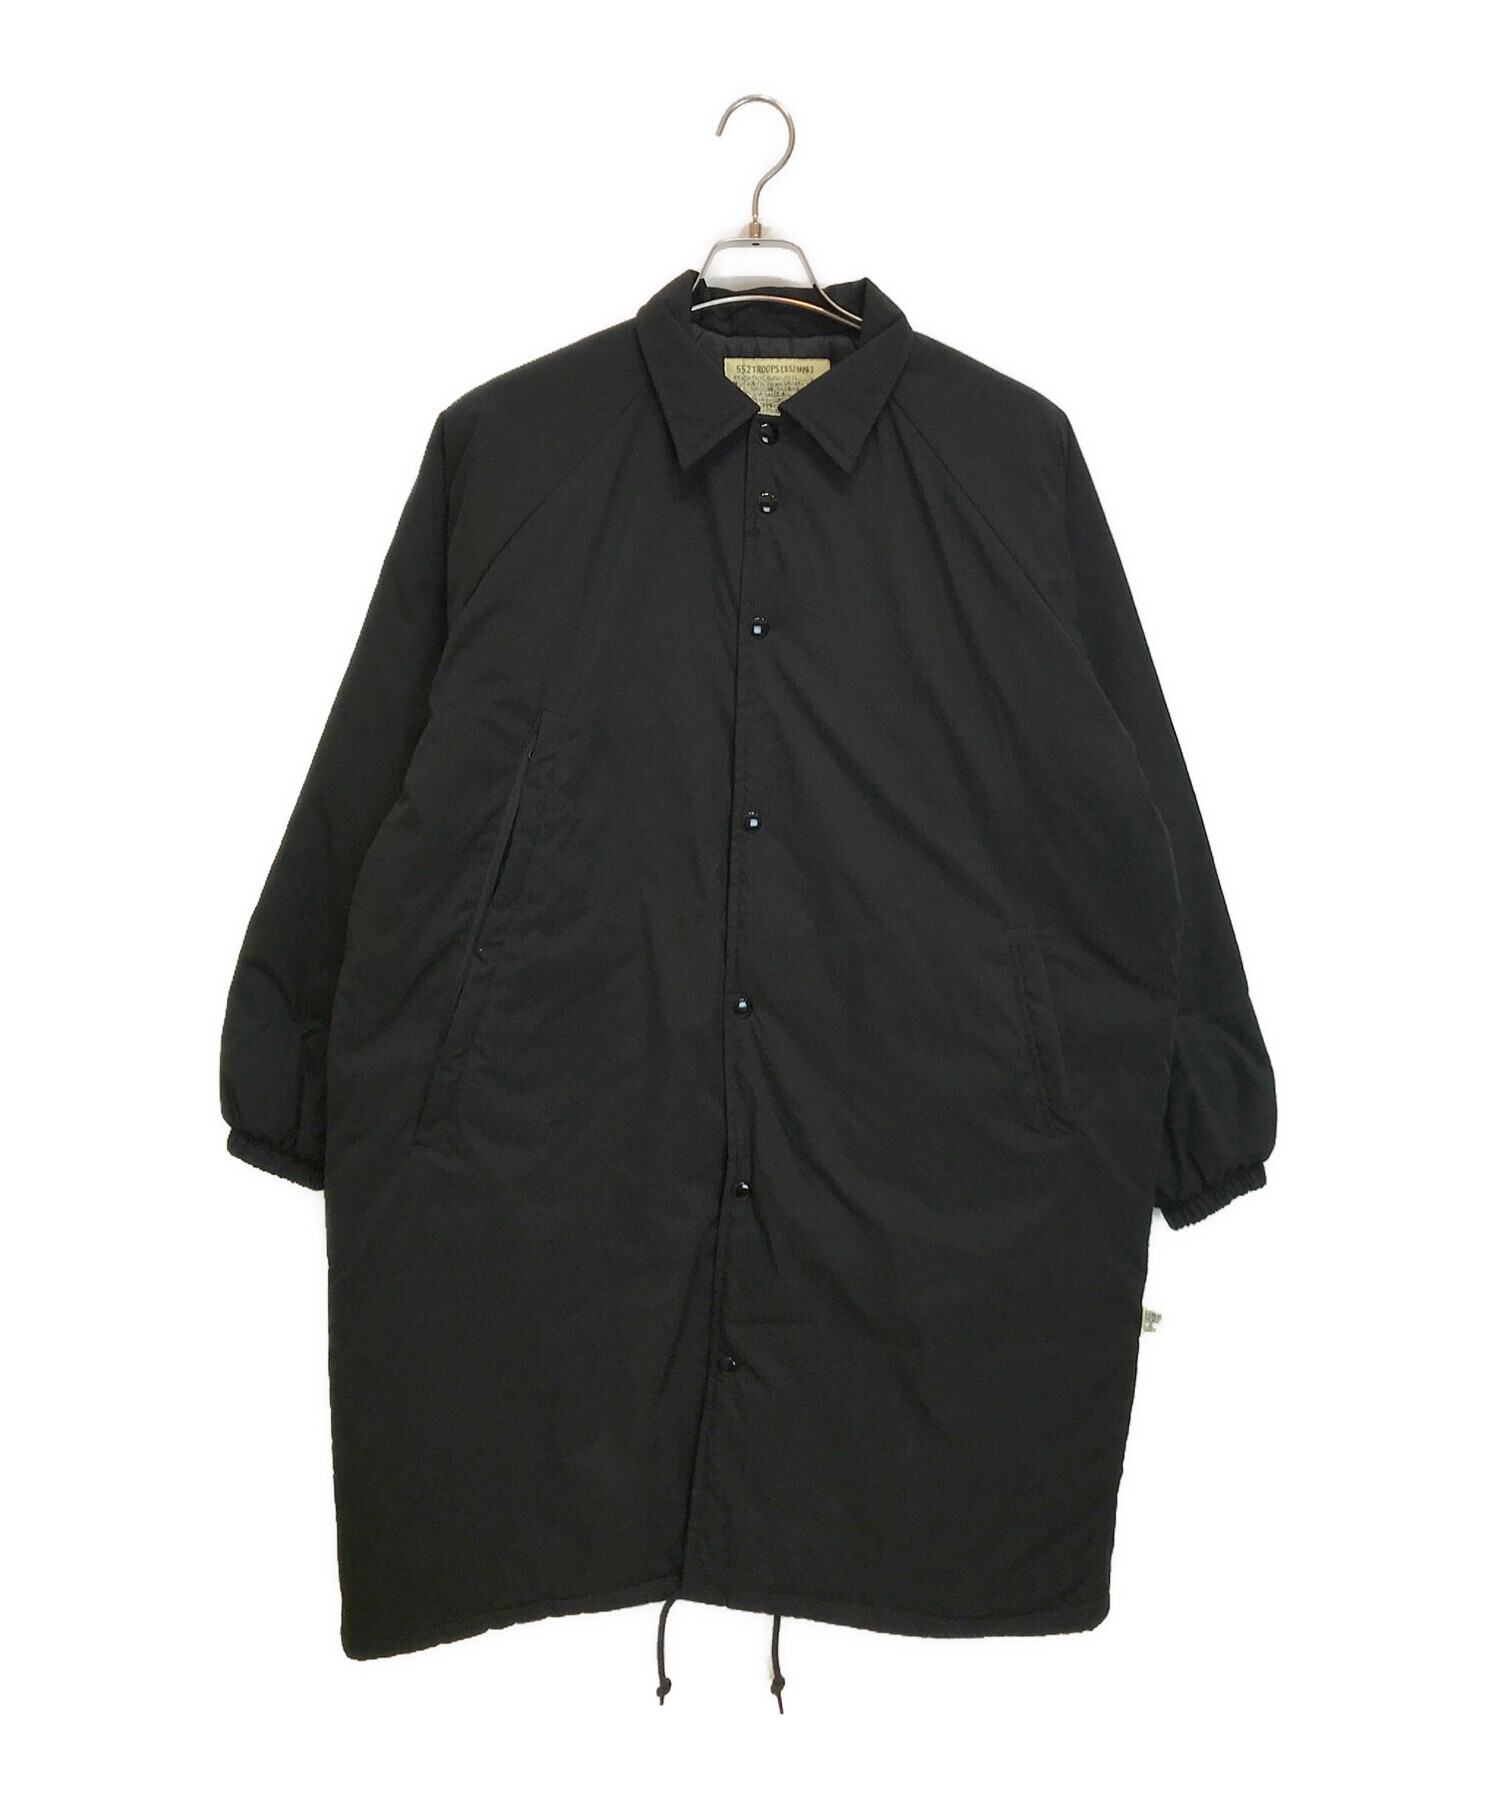 SSZ (エスエスズィー) Long Coach Jacket ブラック サイズ:S